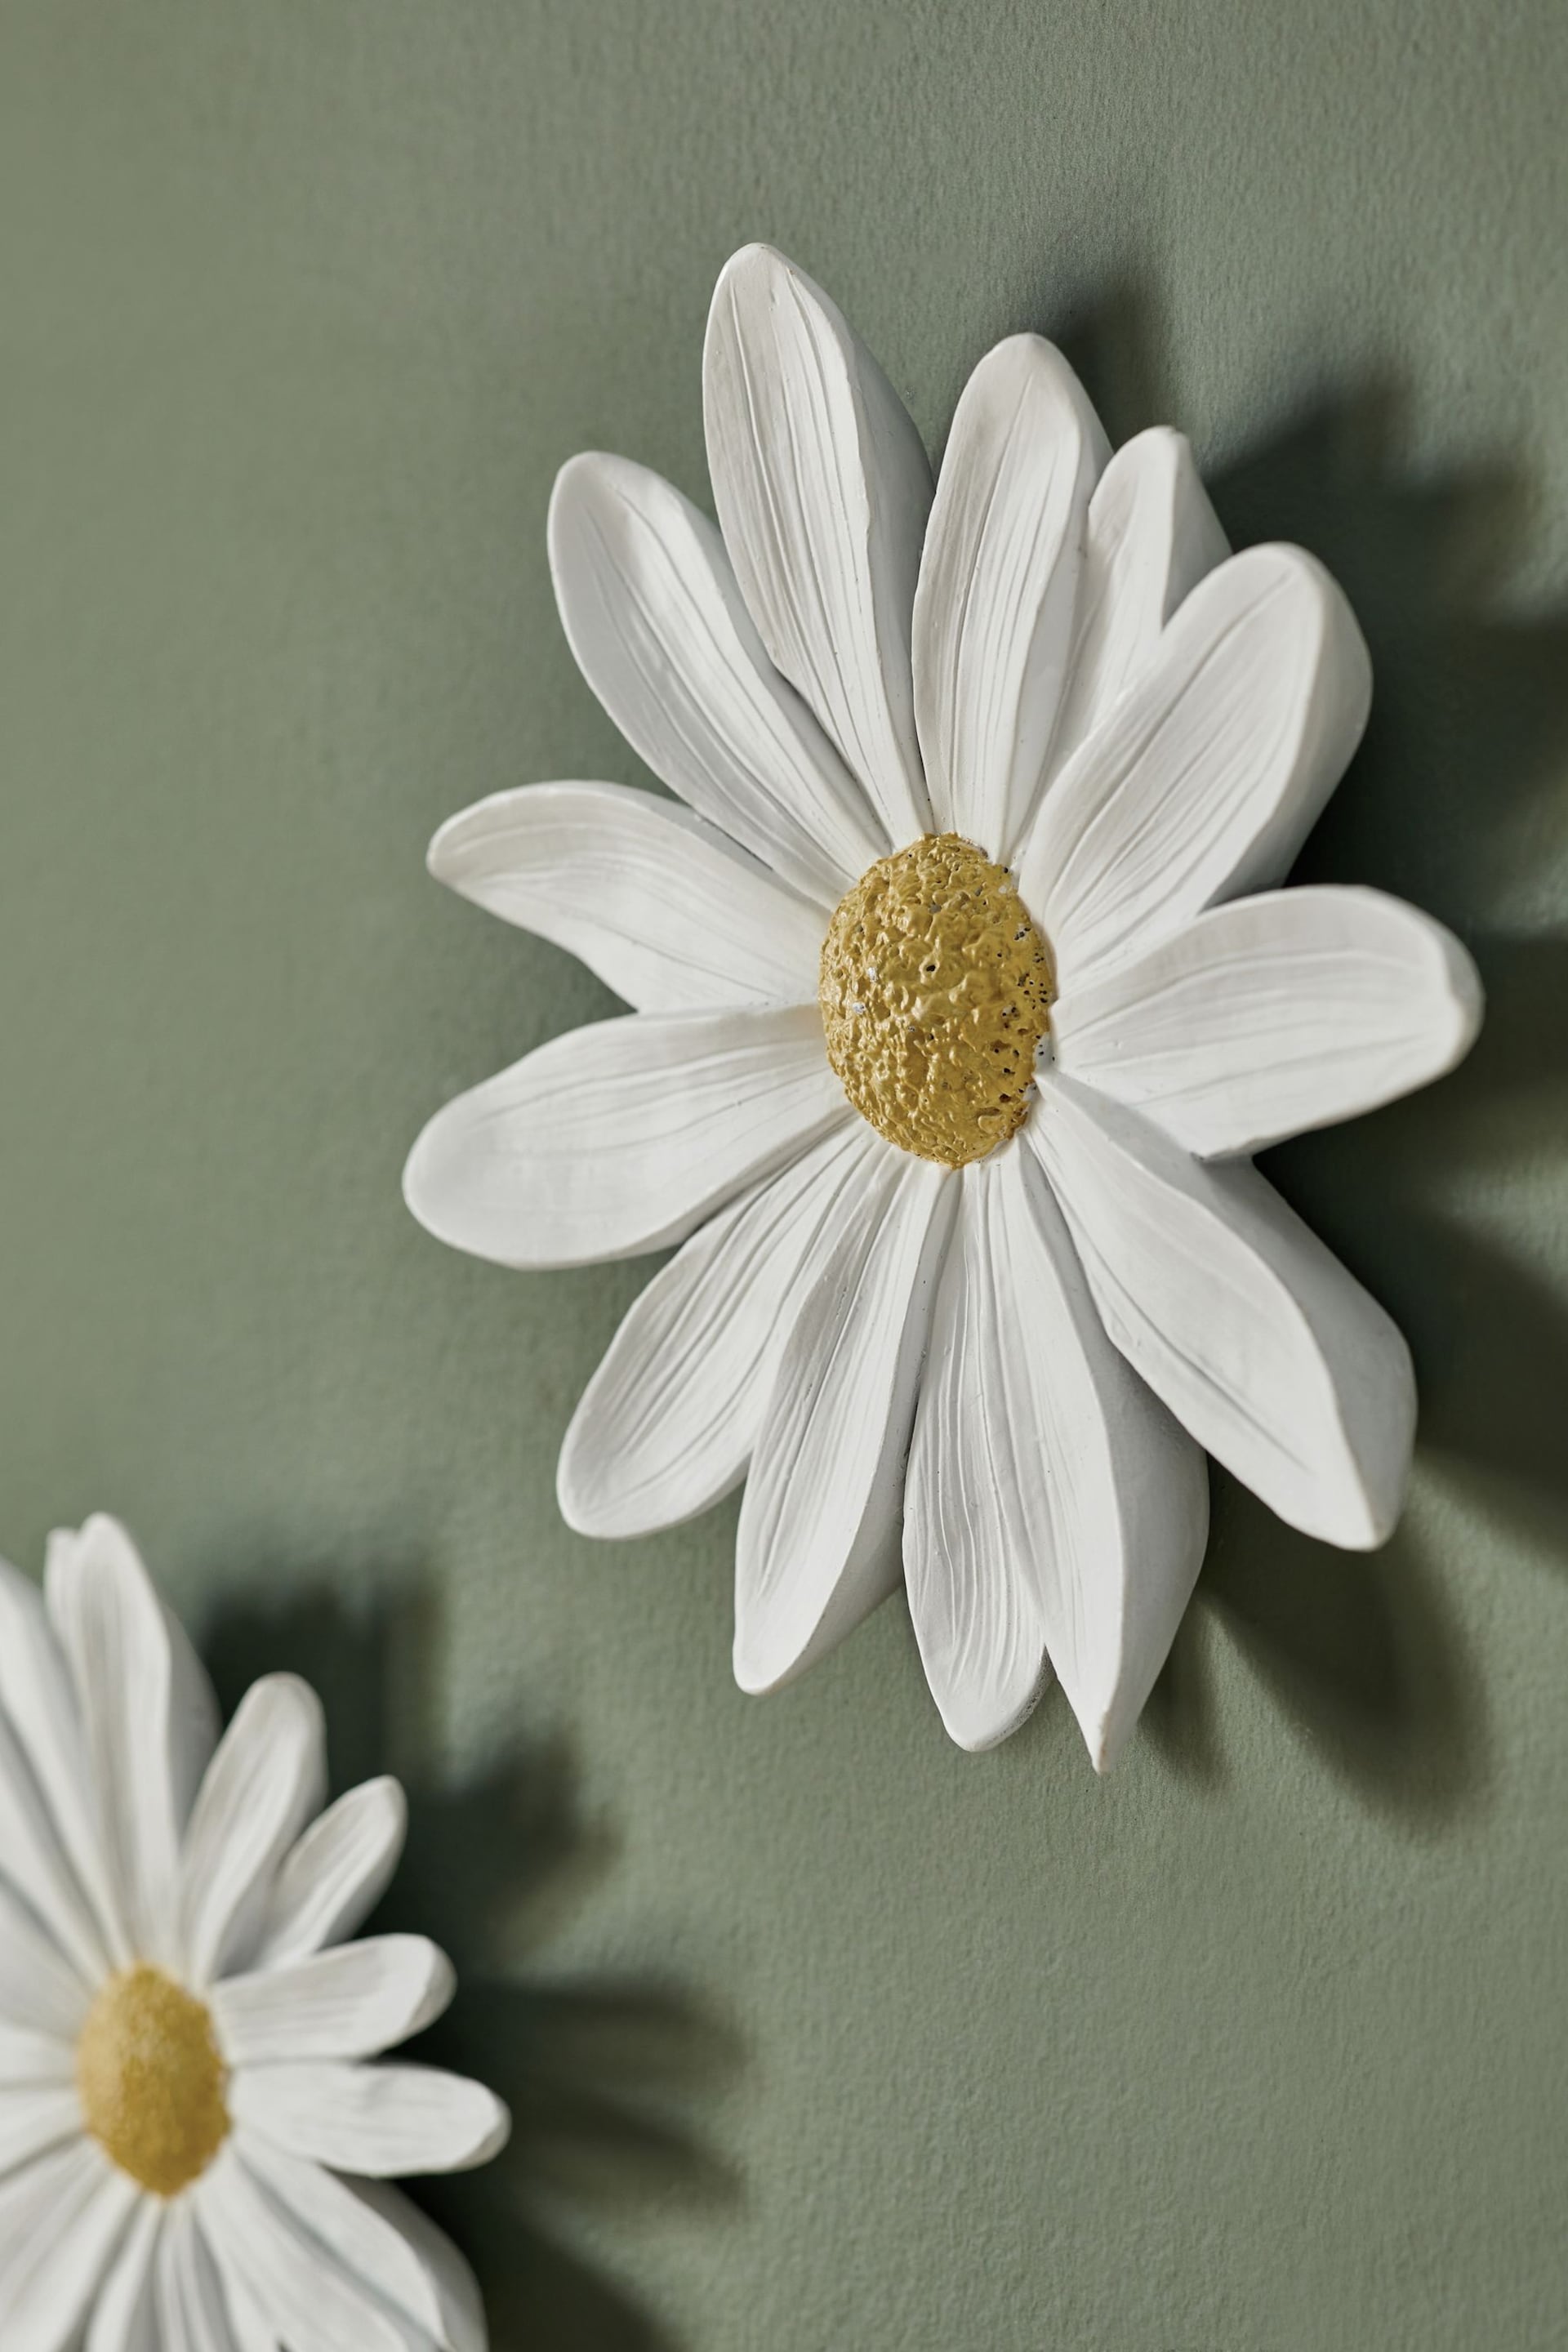 Set of 3 White Daisy Flower Wall Art - Image 3 of 5